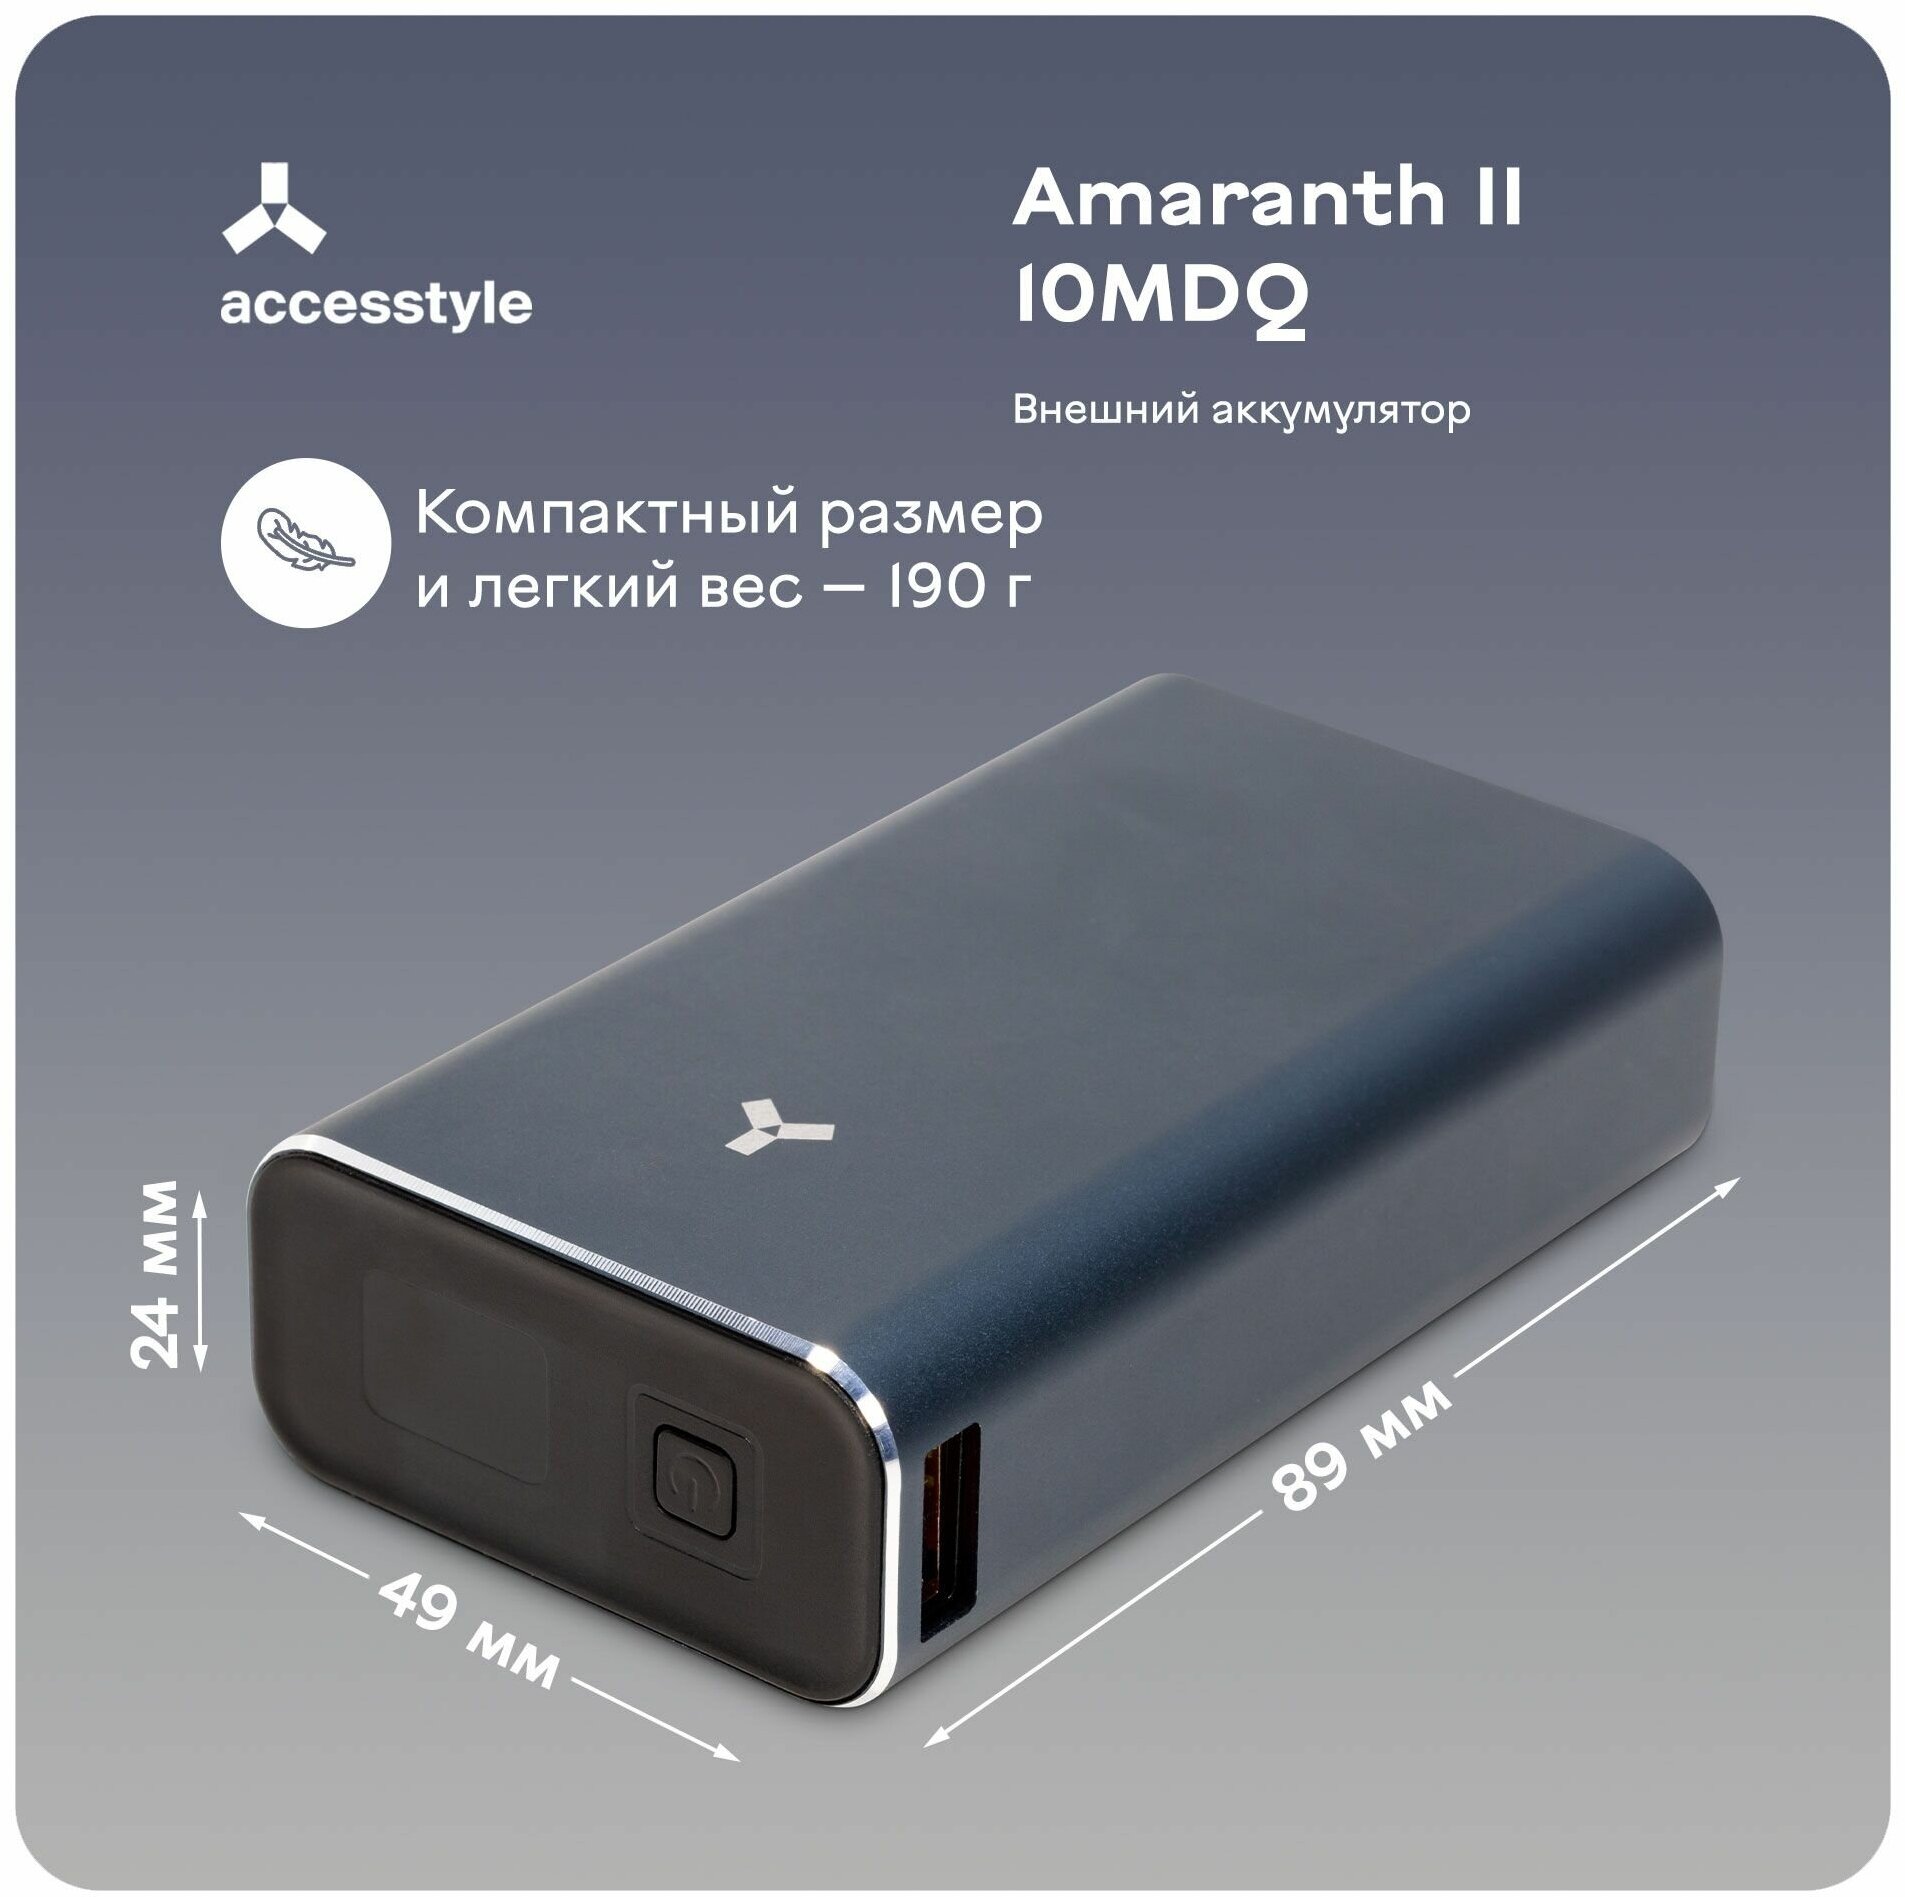 Внешний аккумулятор Accesstyle Amaranth II 10MDQ синий